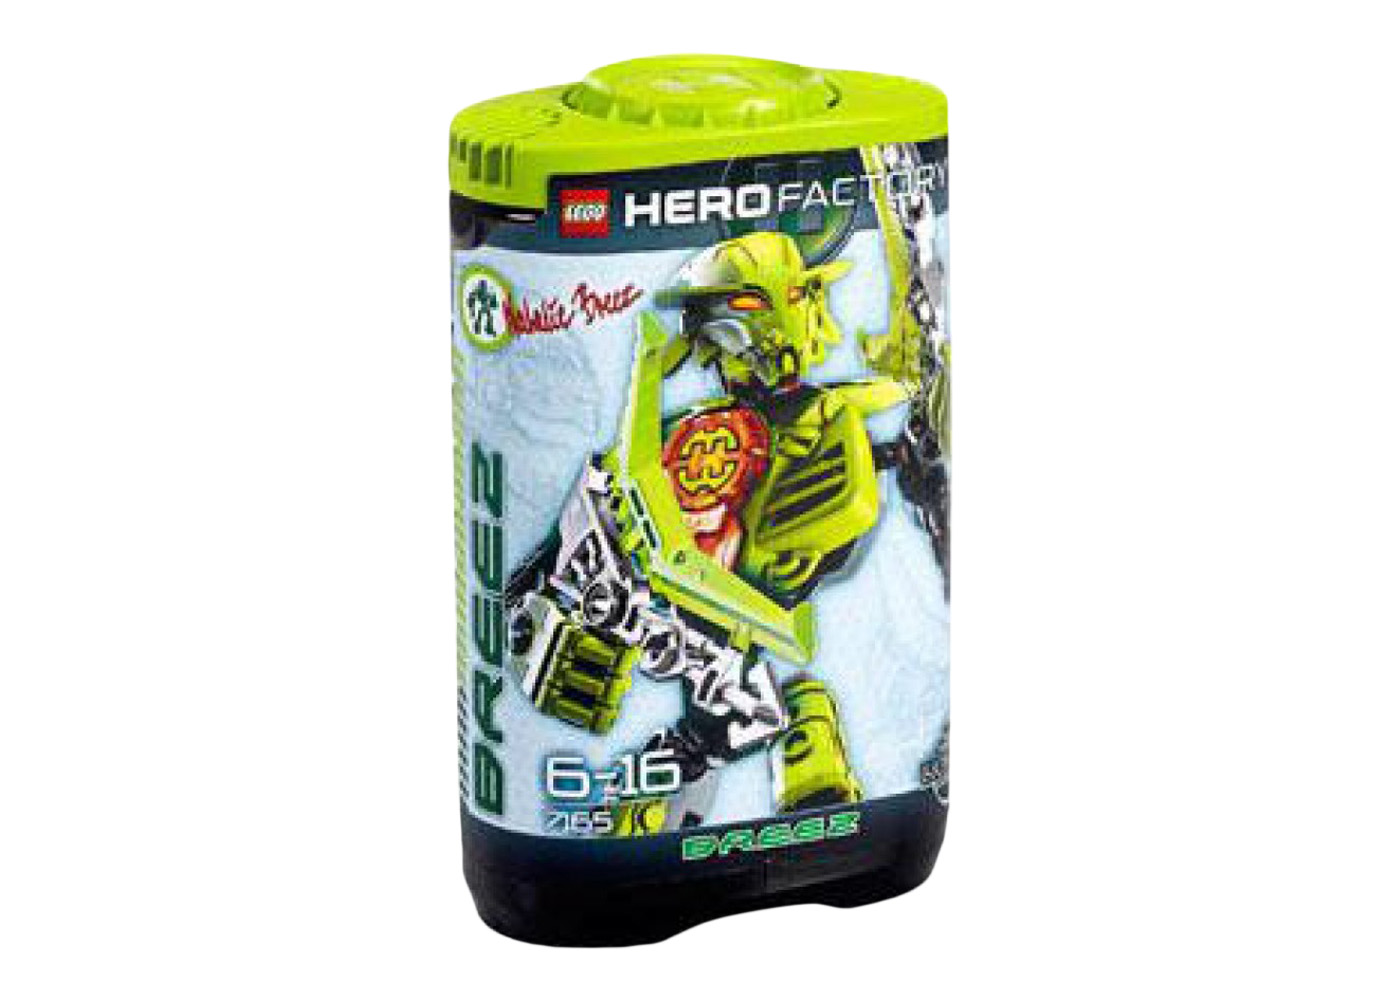 LEGO Hero Factory Furno 2.0 Set 2065 - US